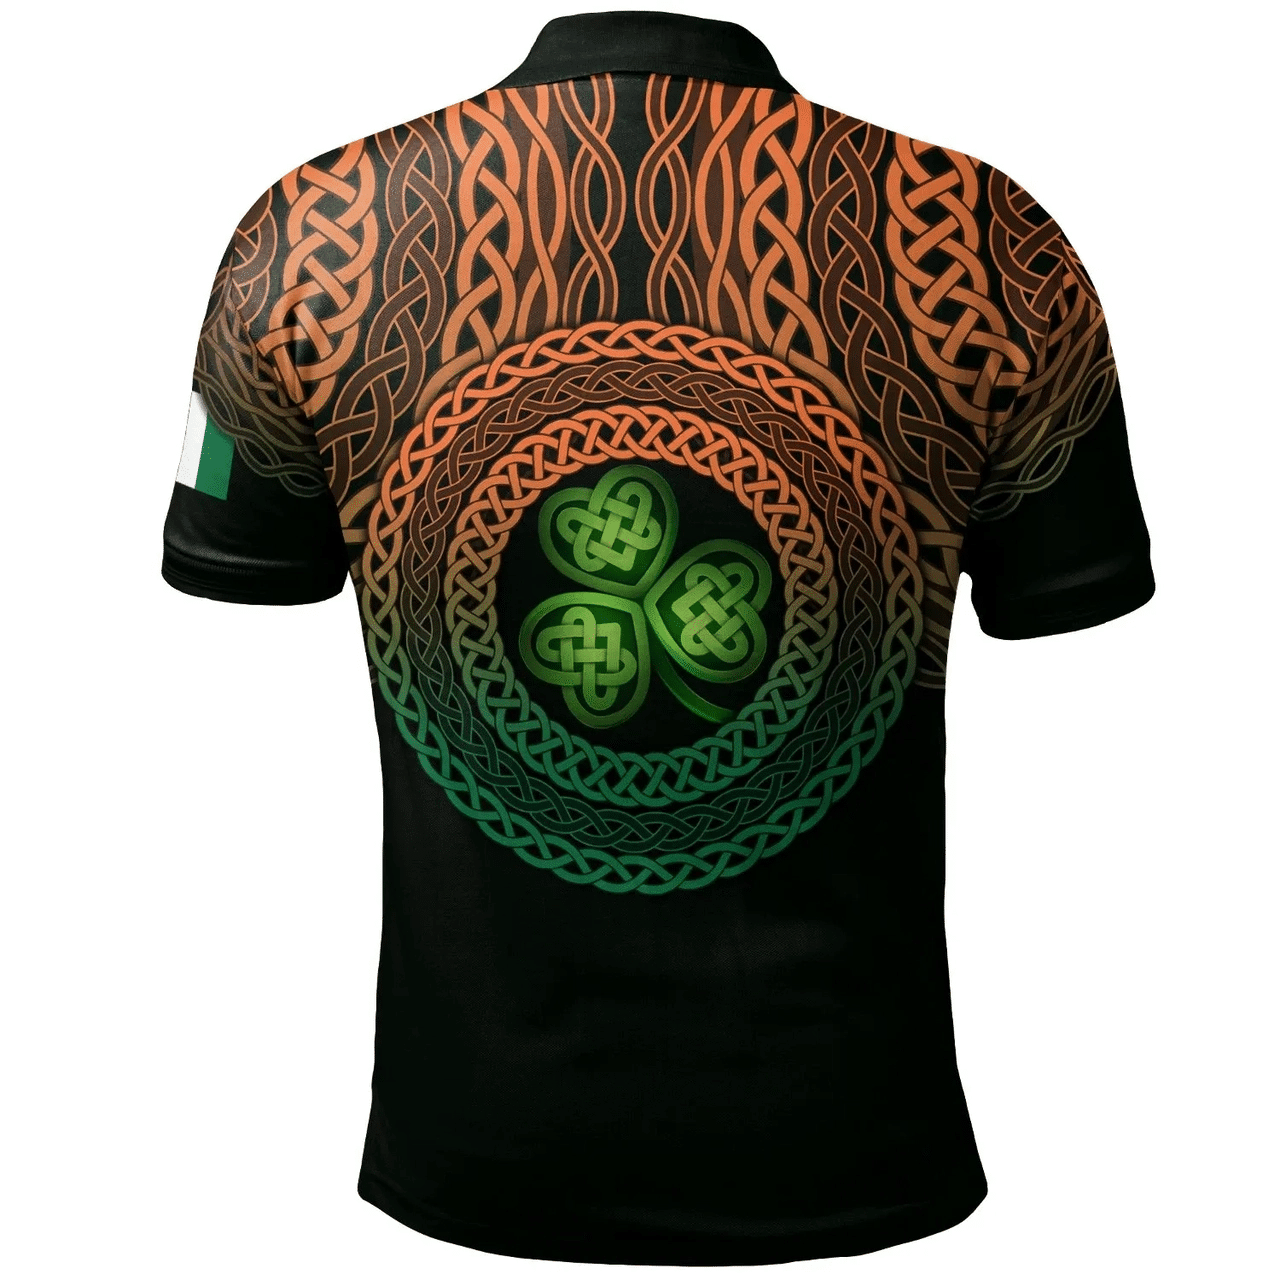 1stIreland Ireland Polo Shirt - Keefe or O'Keefe Irish Family Crest Polo Shirt - Celtic Pride A7 | 1stIreland.com